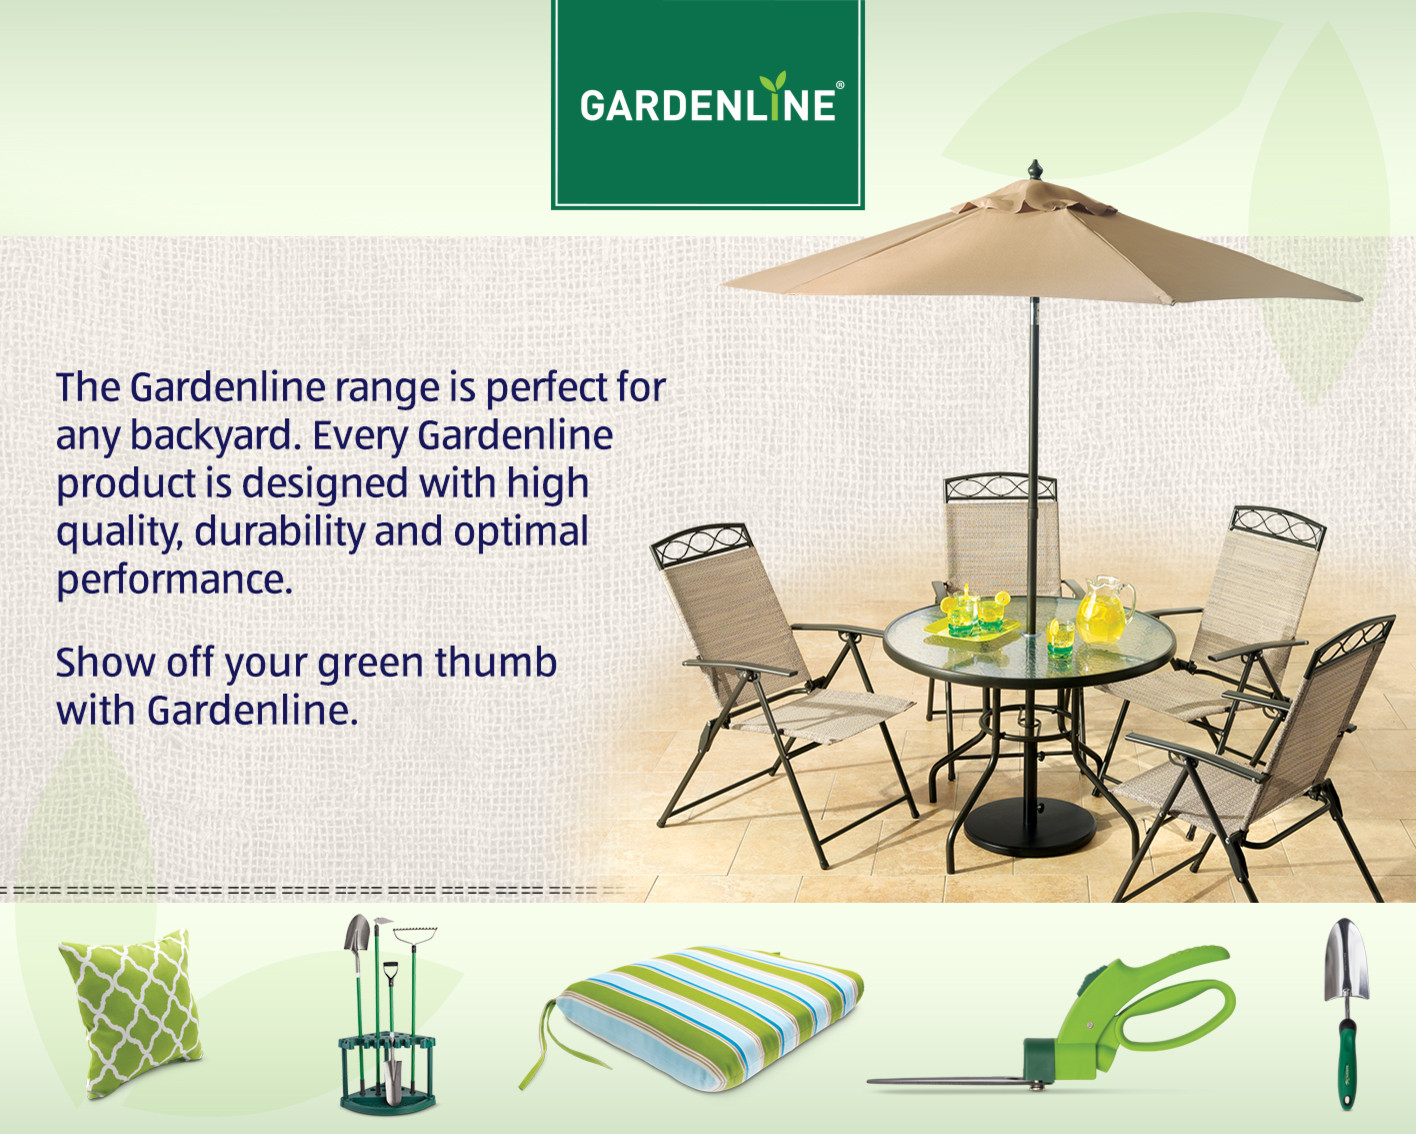 Gardenline Garden Outdoor Products Aldi Us